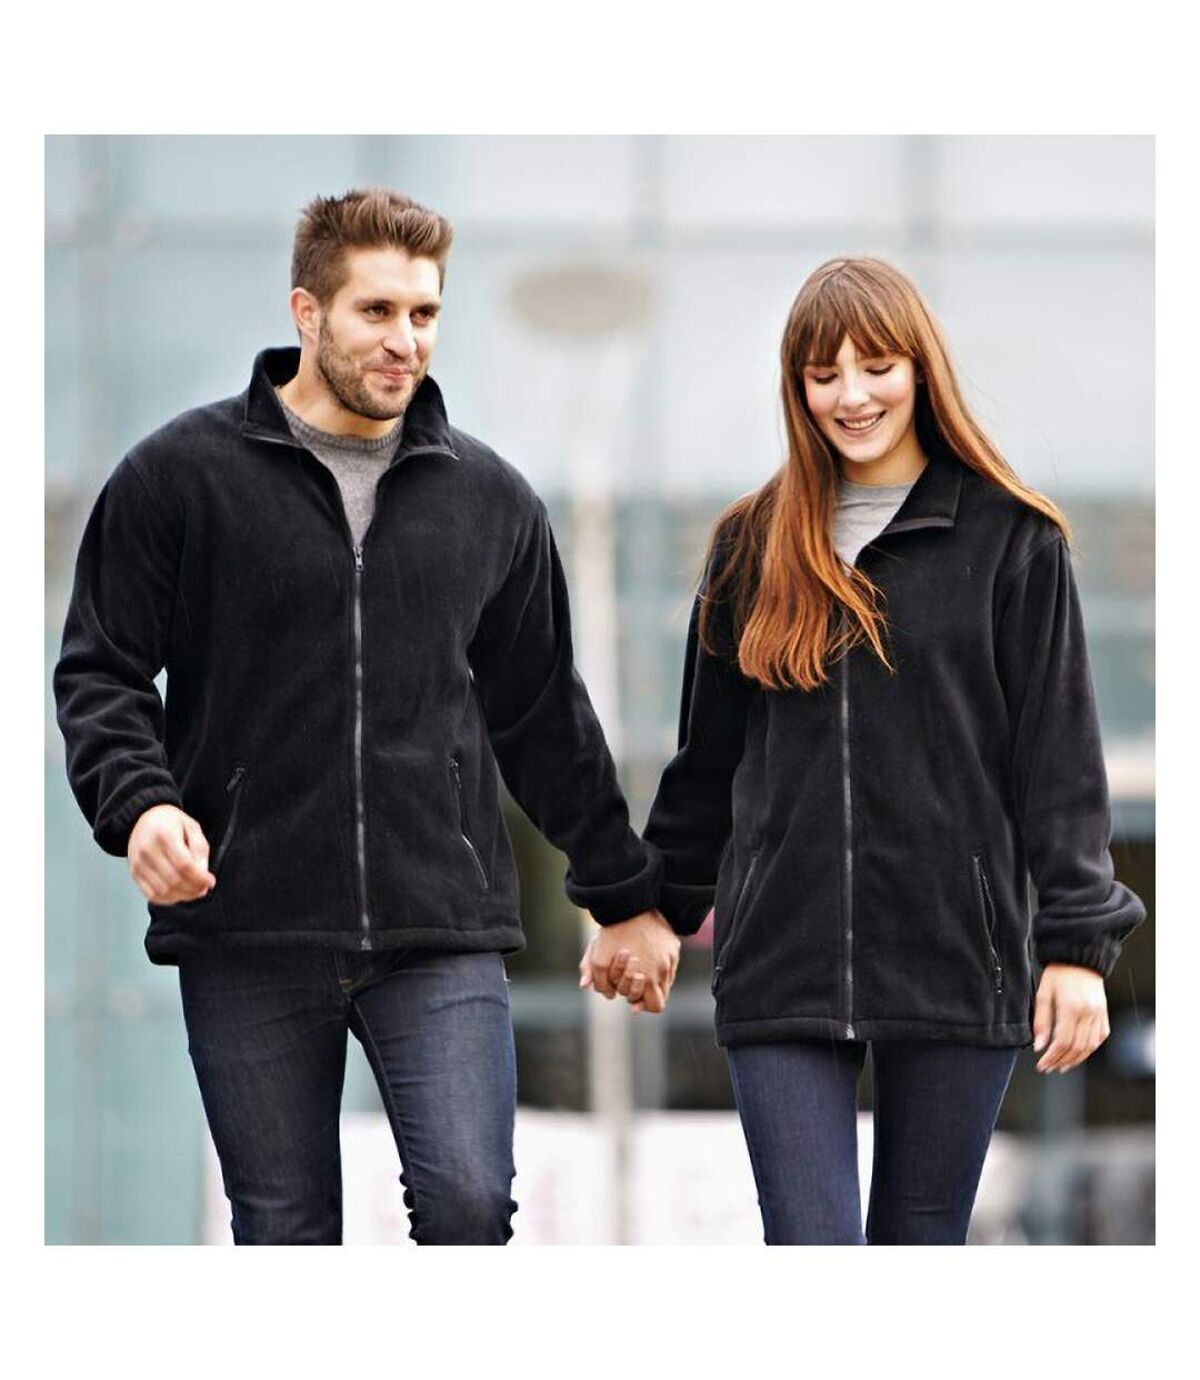 Result Mens Core Fashion Fit Outdoor Fleece Jacket (Black) - UTBC912